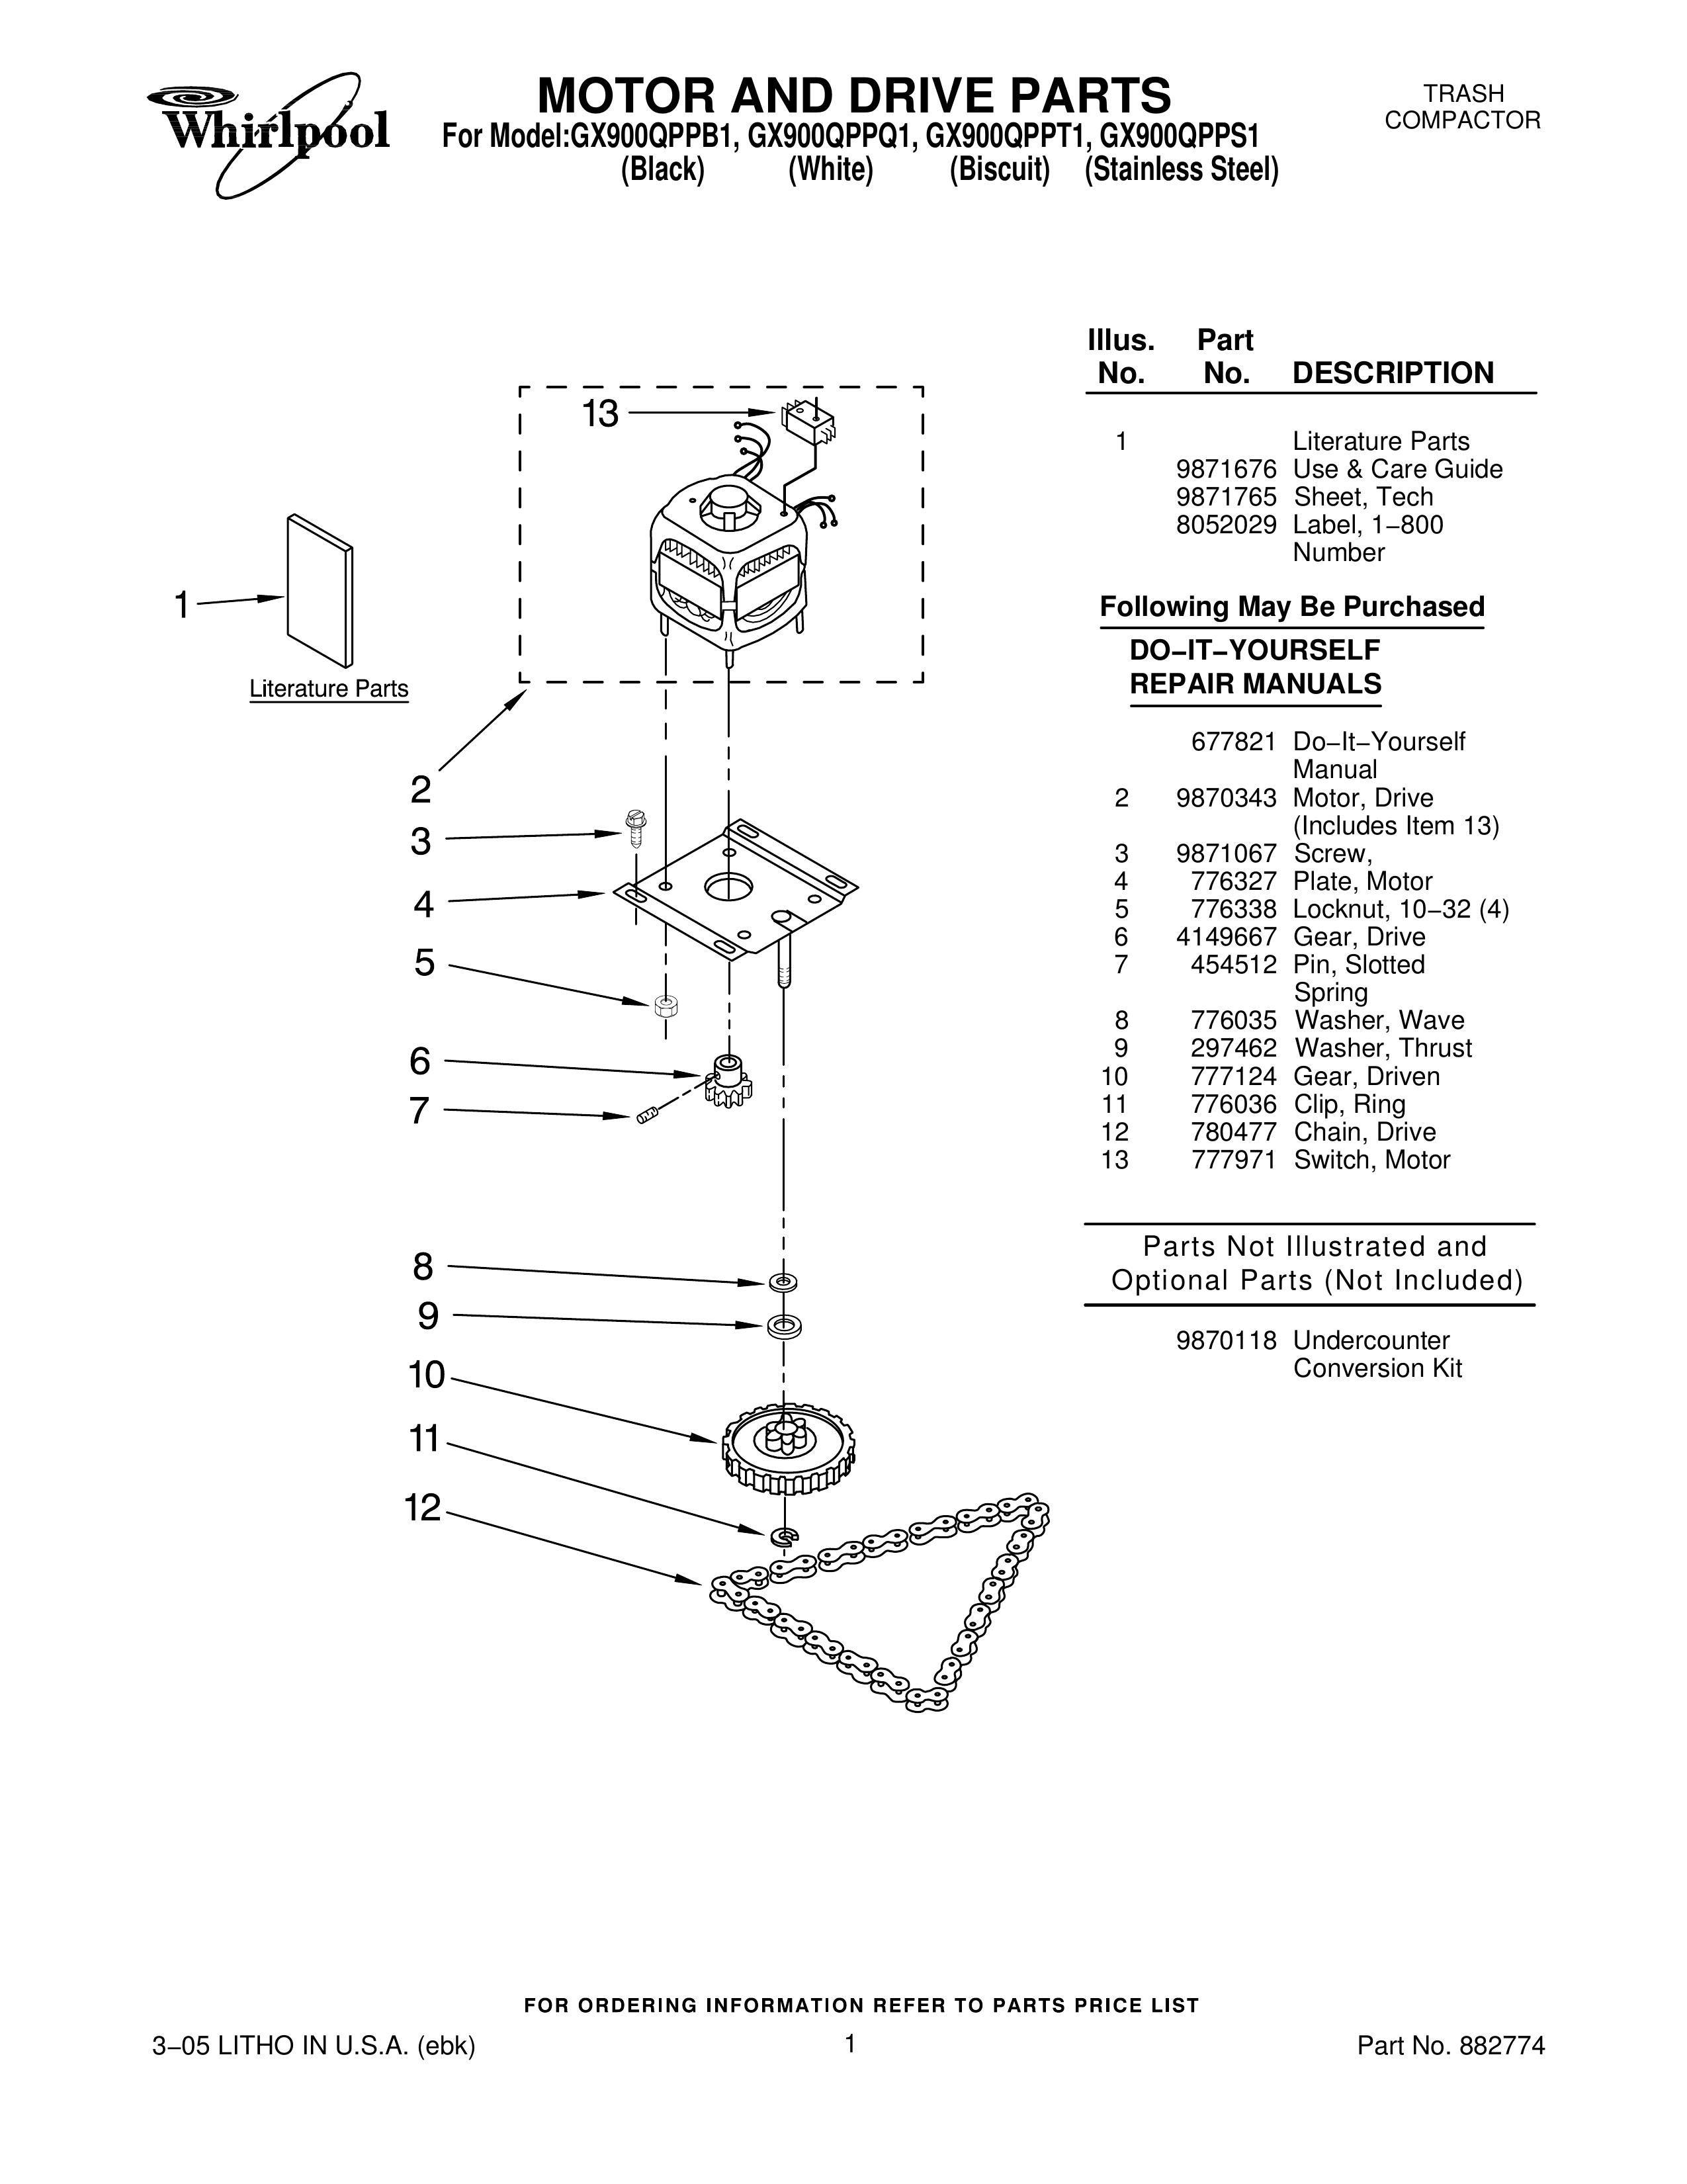 Whirlpool GX900QPPT1 Trash Compactor User Manual